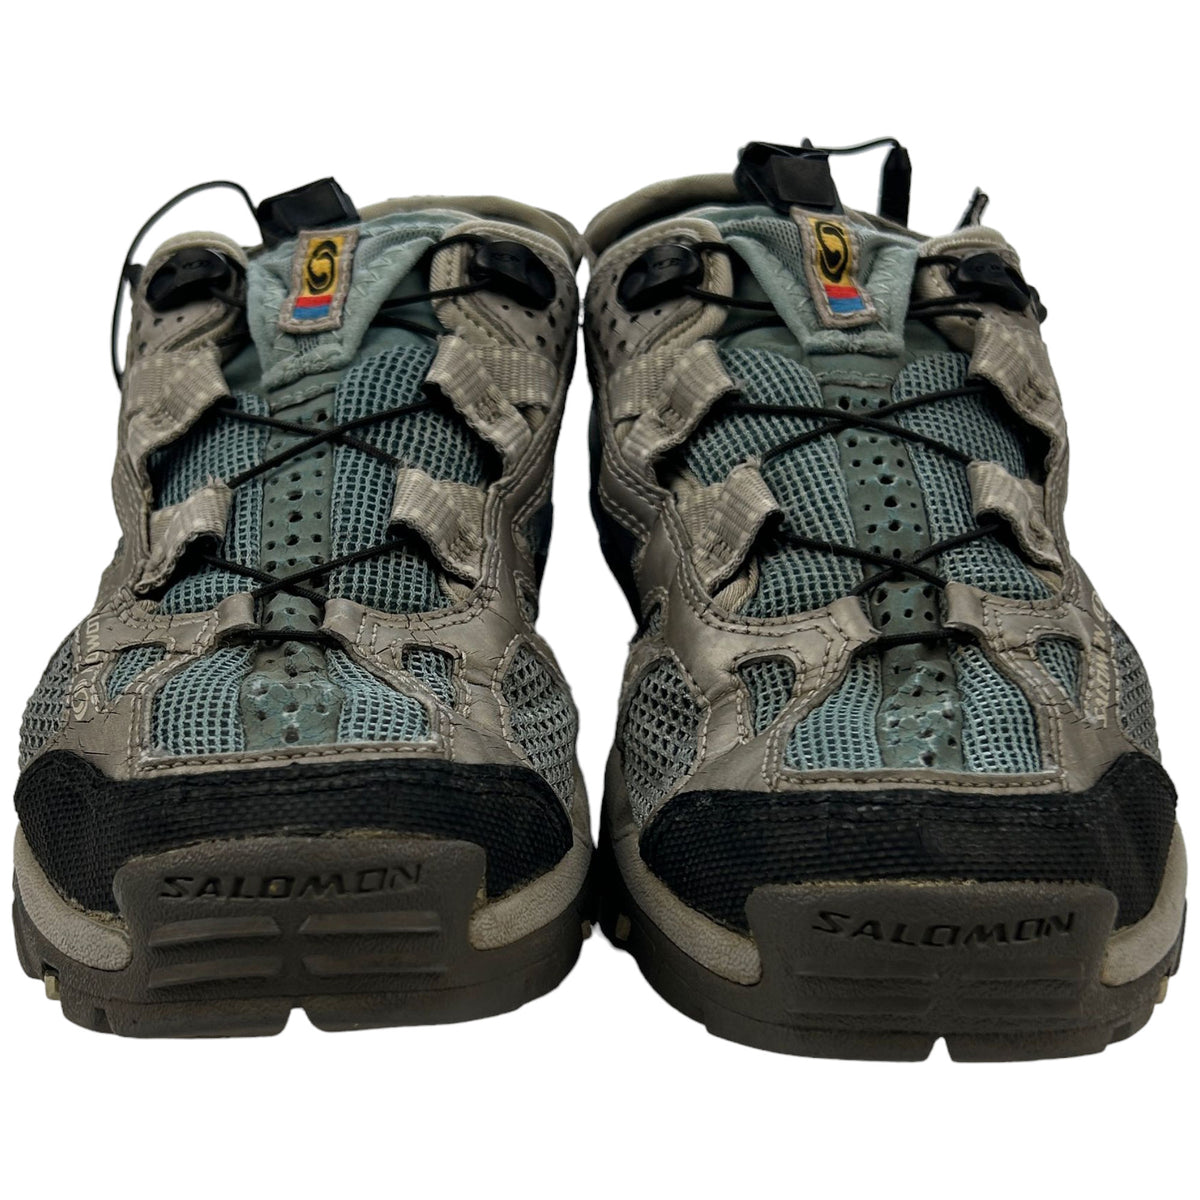 Vintage Salomon Hiking Shoes Size 7